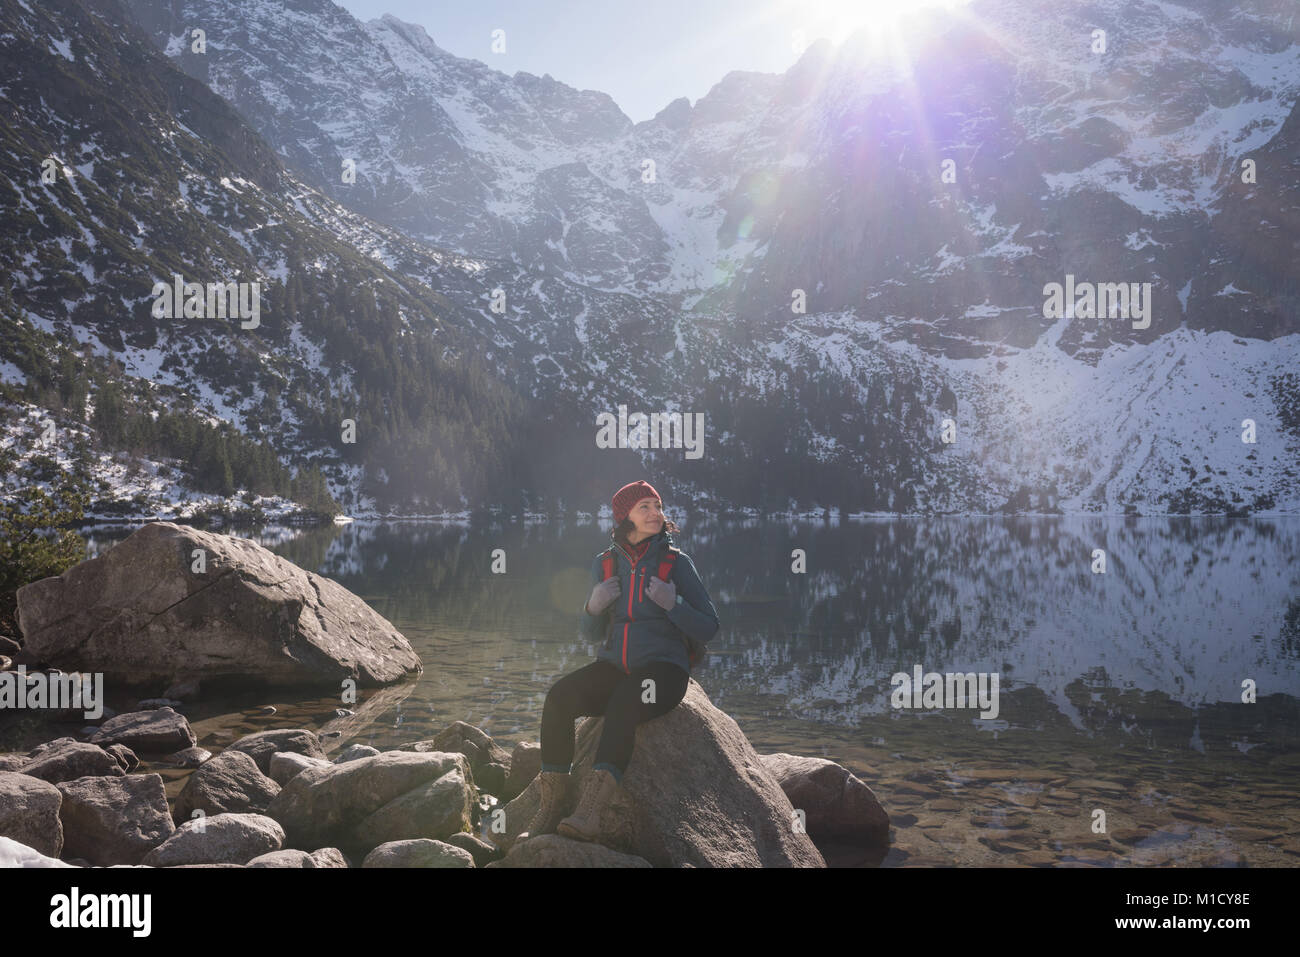 Female hiker sitting on rock at lakeside Stock Photo